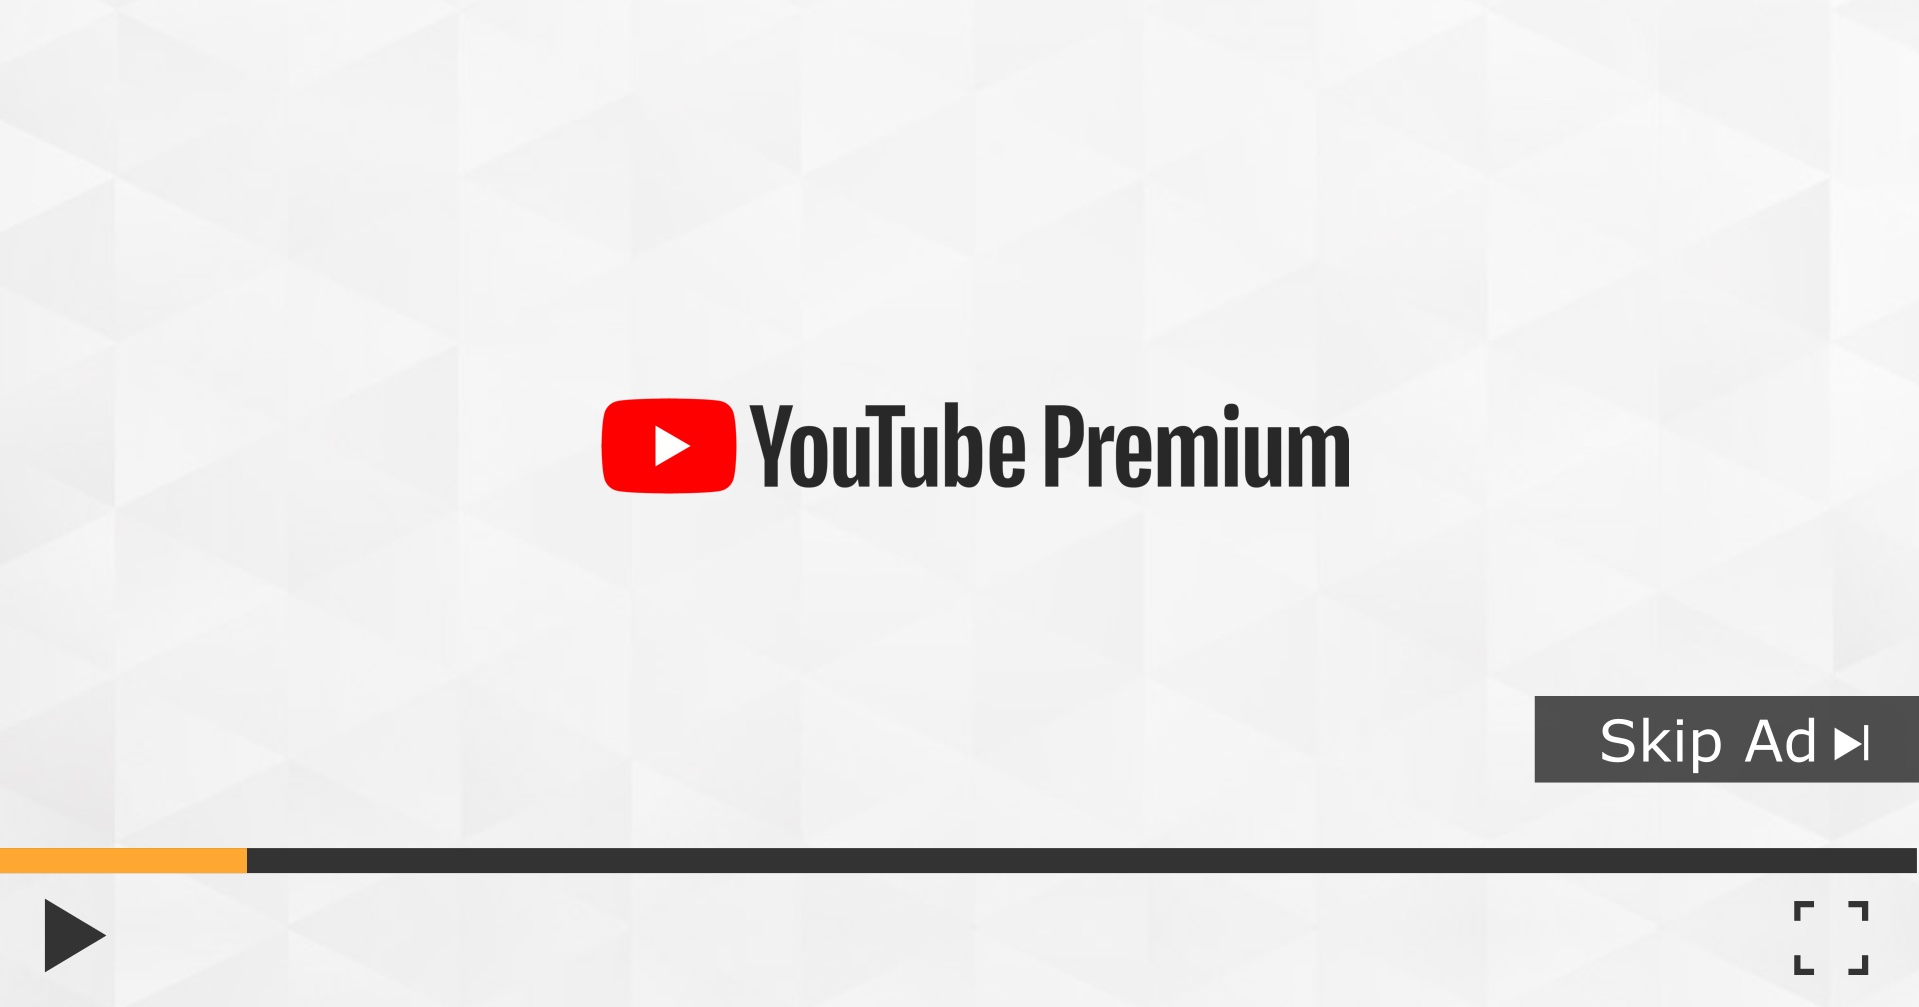 Youtube skip ad. Youtube Premium. Ютуб премиум. Ютуб премиум закрыли. Ютуб премиум сколько стоит